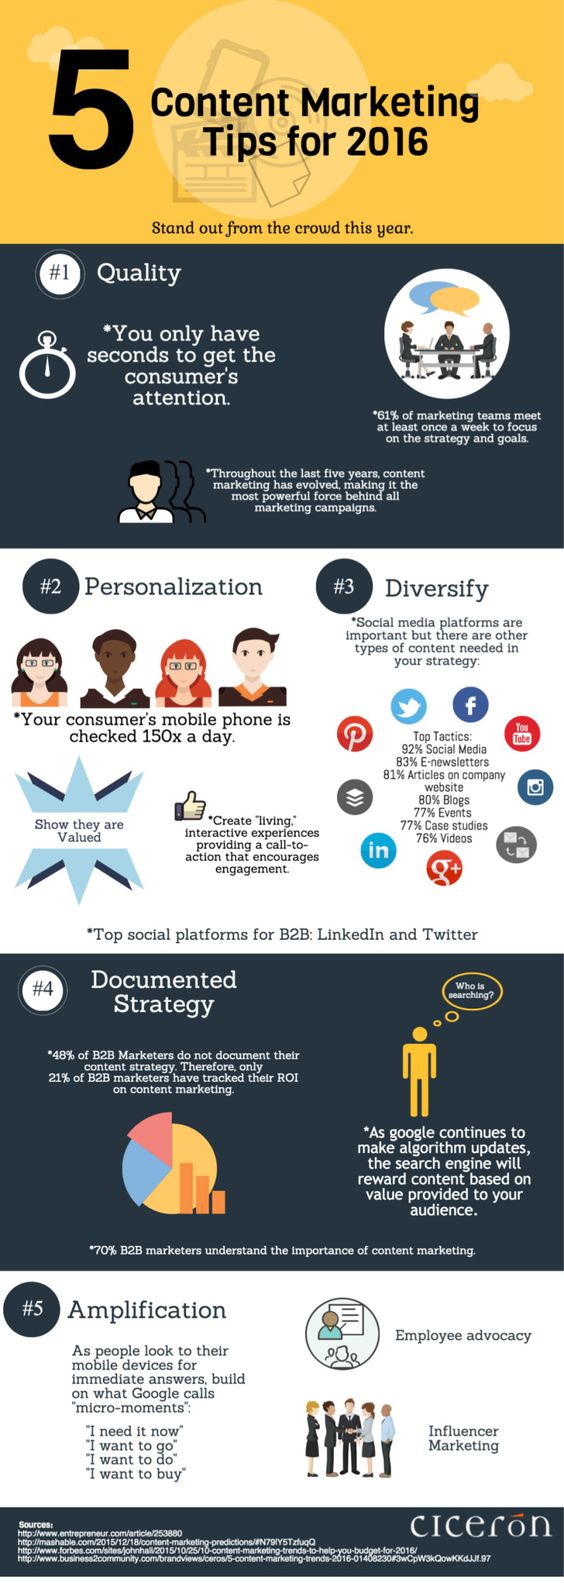 5 content marketing tips for social media.